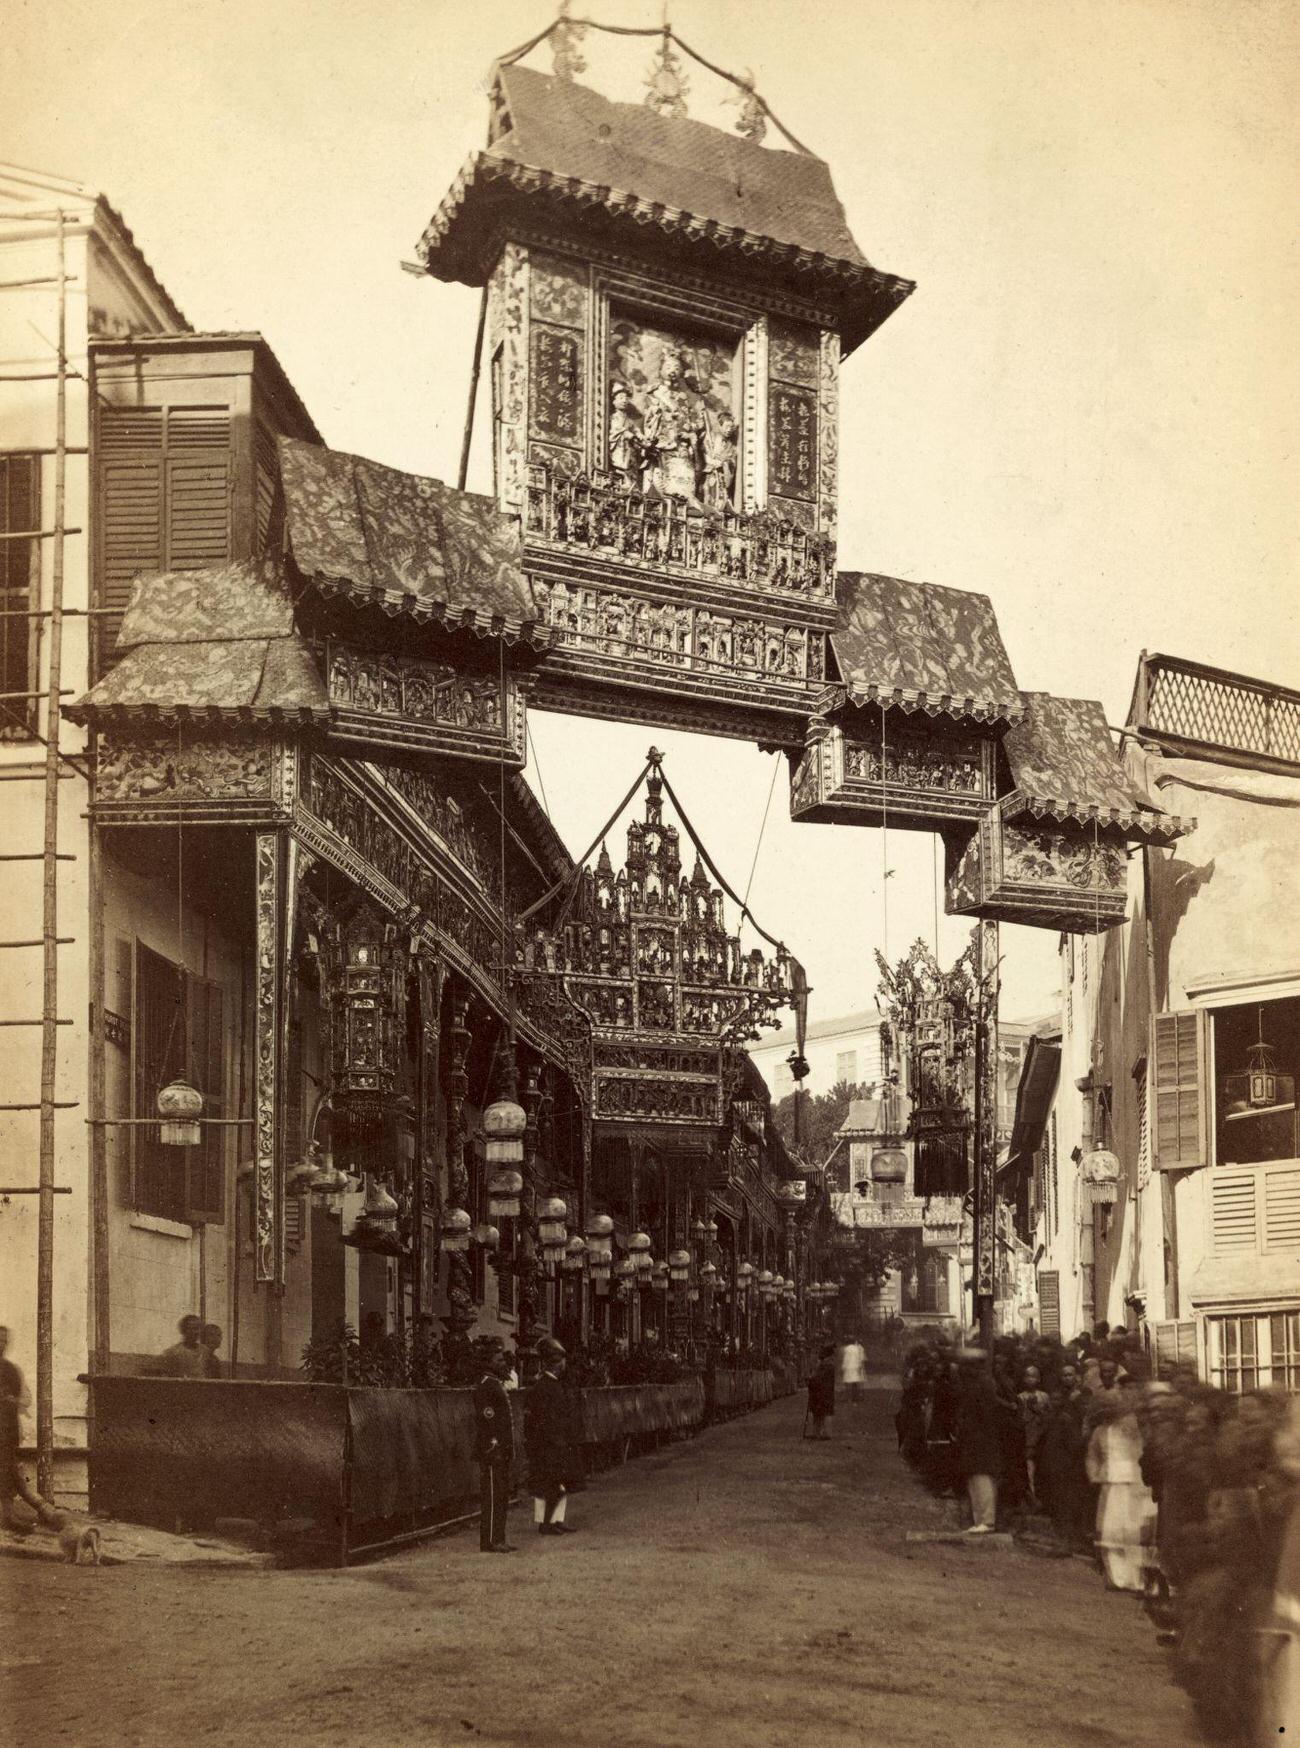 A street in Hong Kong illuminated for the Duke of Edinburgh's visit in 1869.